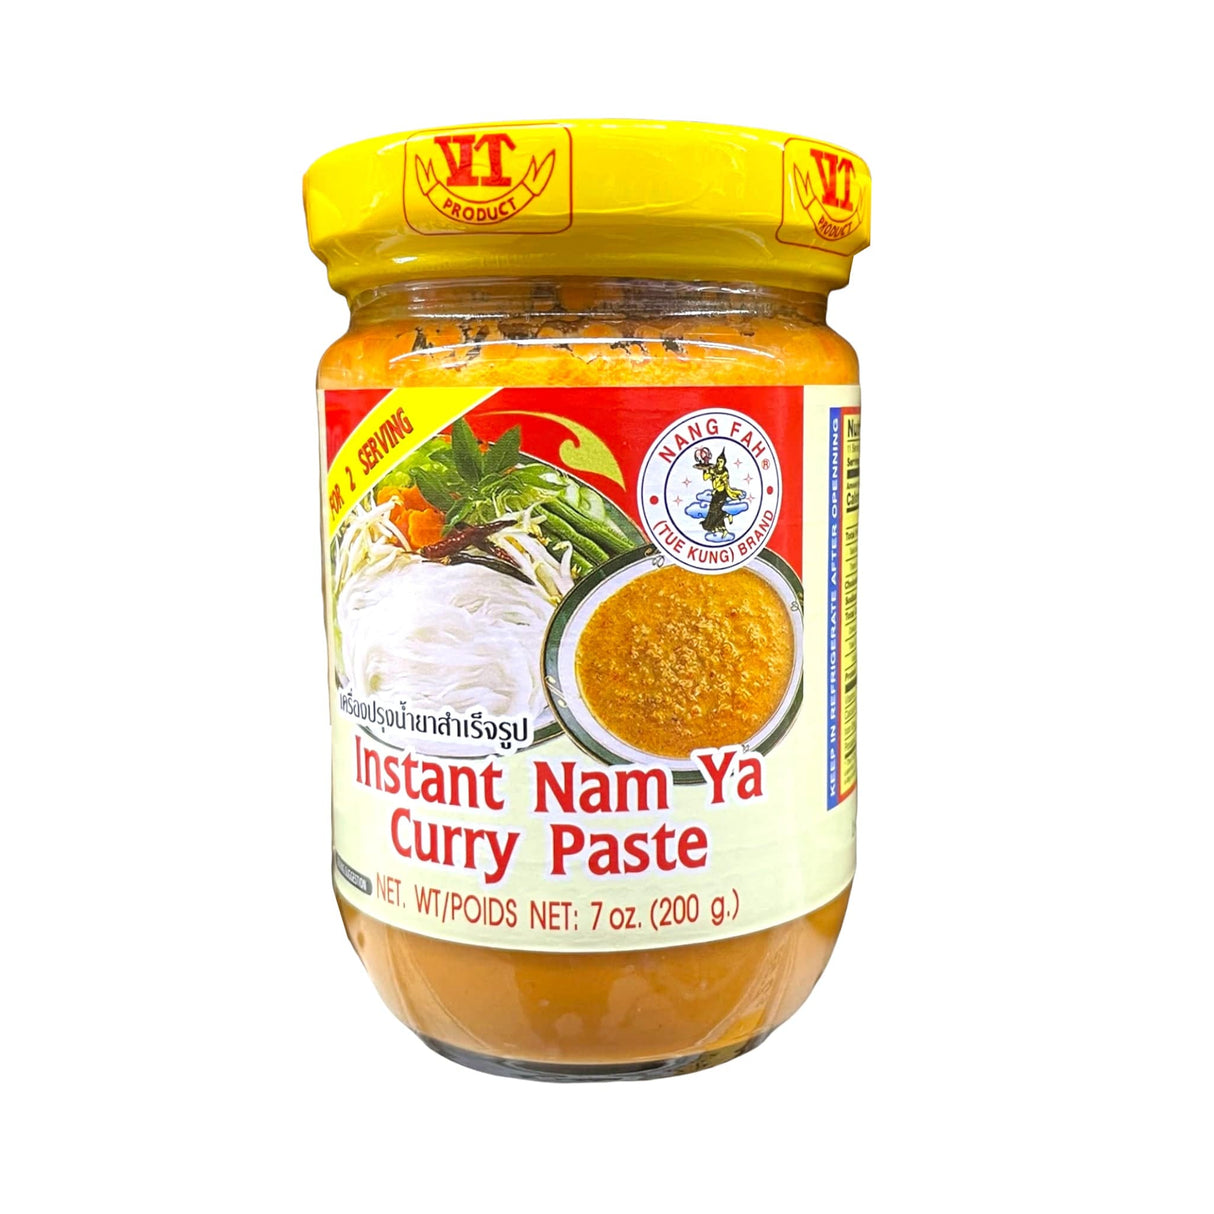 Nang Fah (Tue Kung) Brand Instant Nam Ya Curry Paste